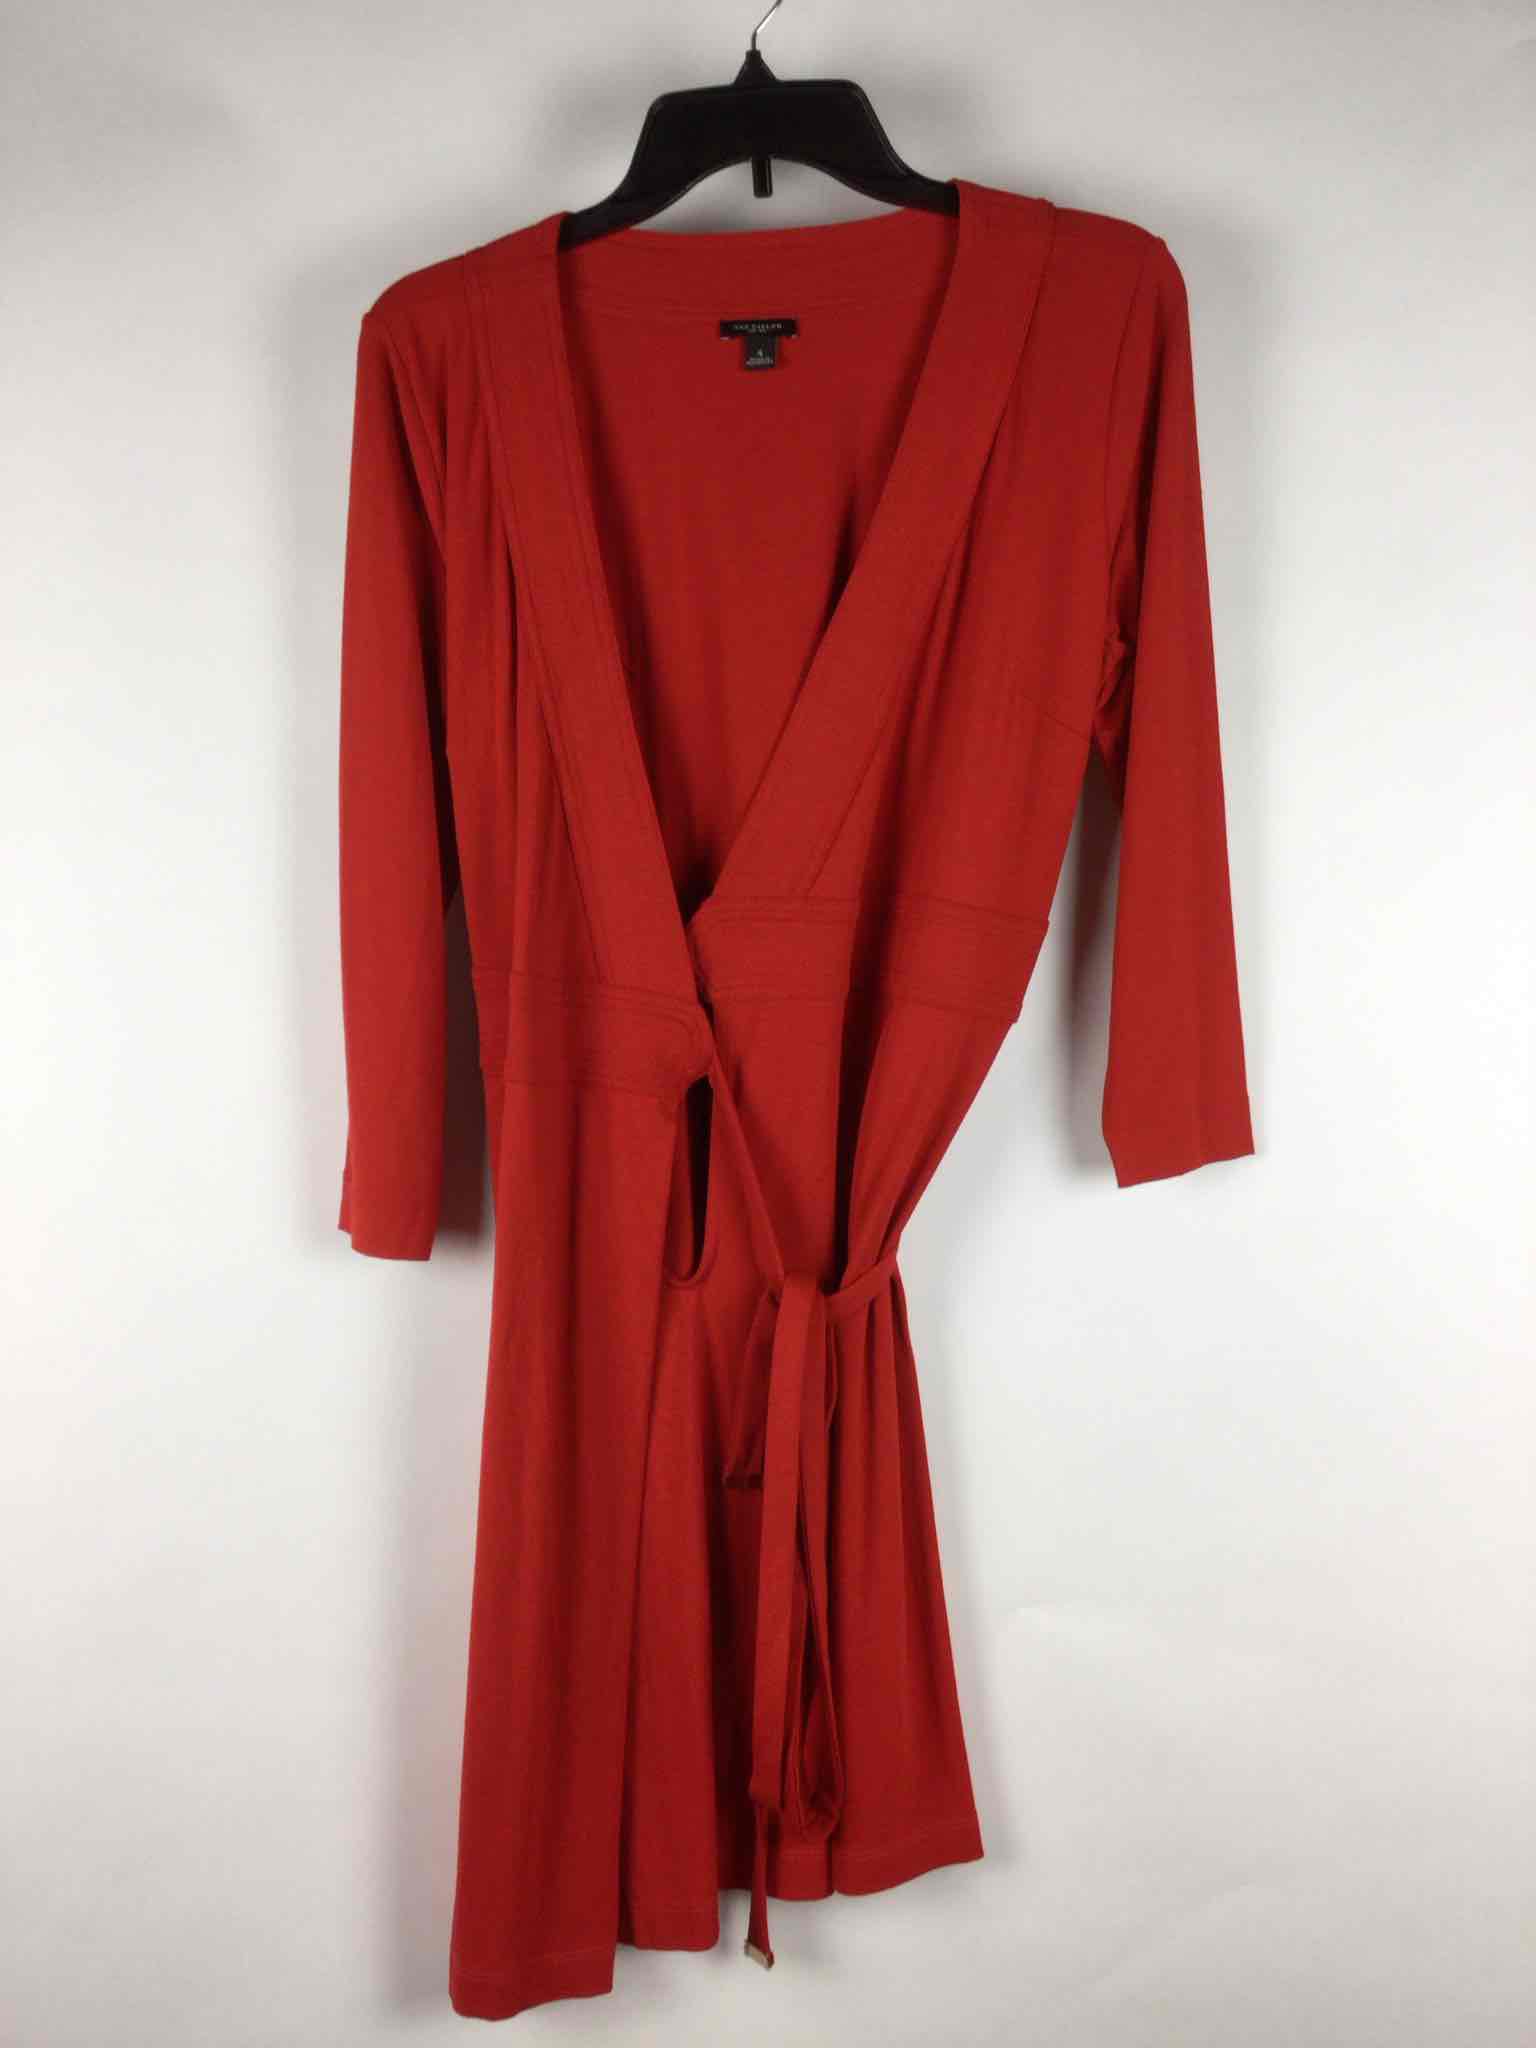 Ann Taylor Red 3/4-Sleeve Belted V-Neck Wrap Dress 4 | eBay